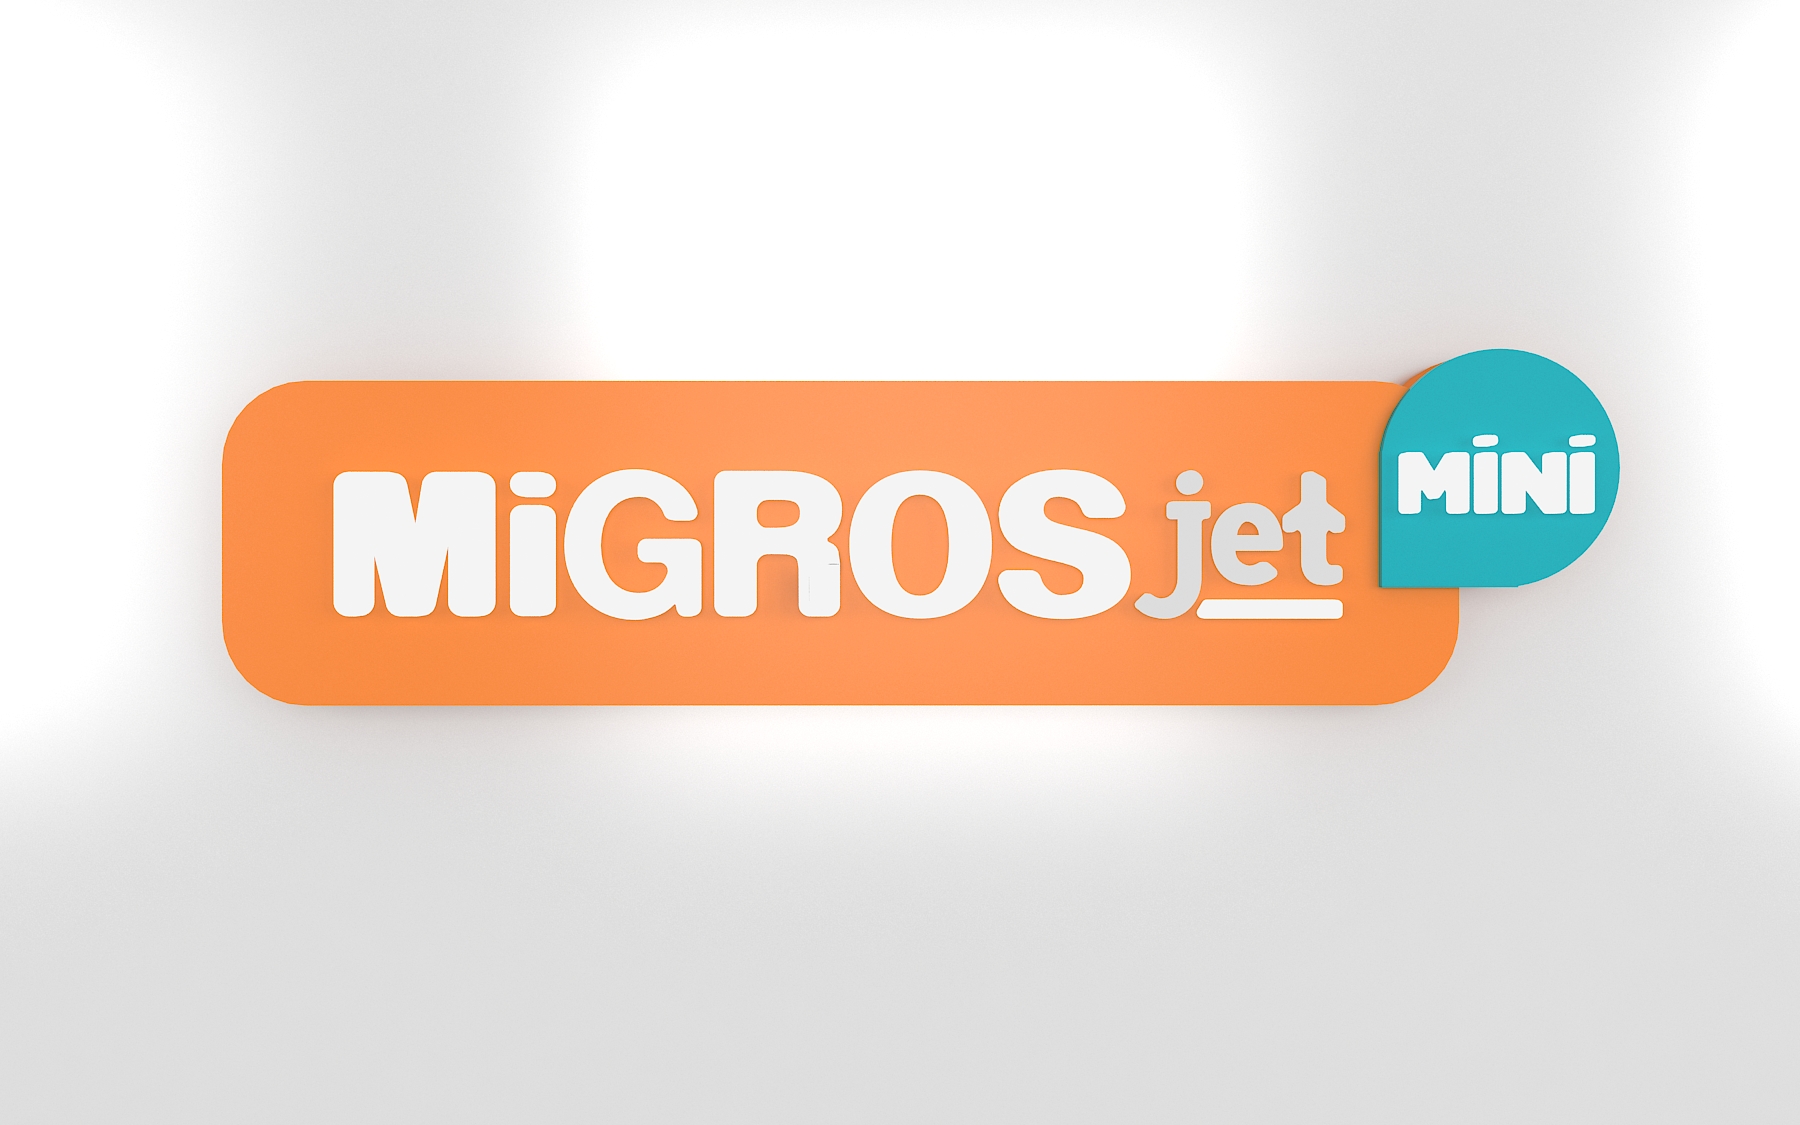 Migros Jet Mini Signboard